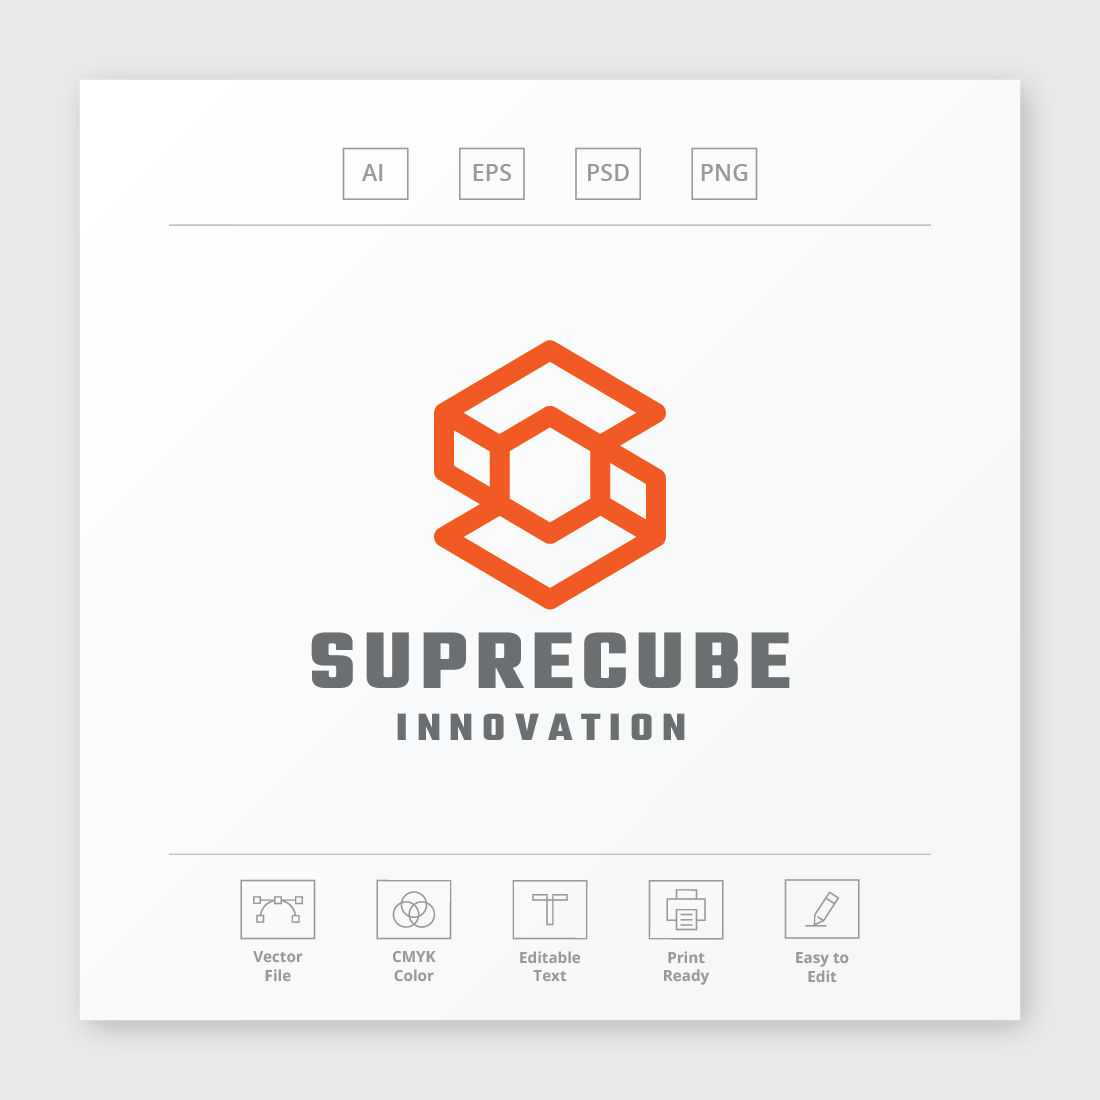 Supreme Cube Letter S Logo cover image.